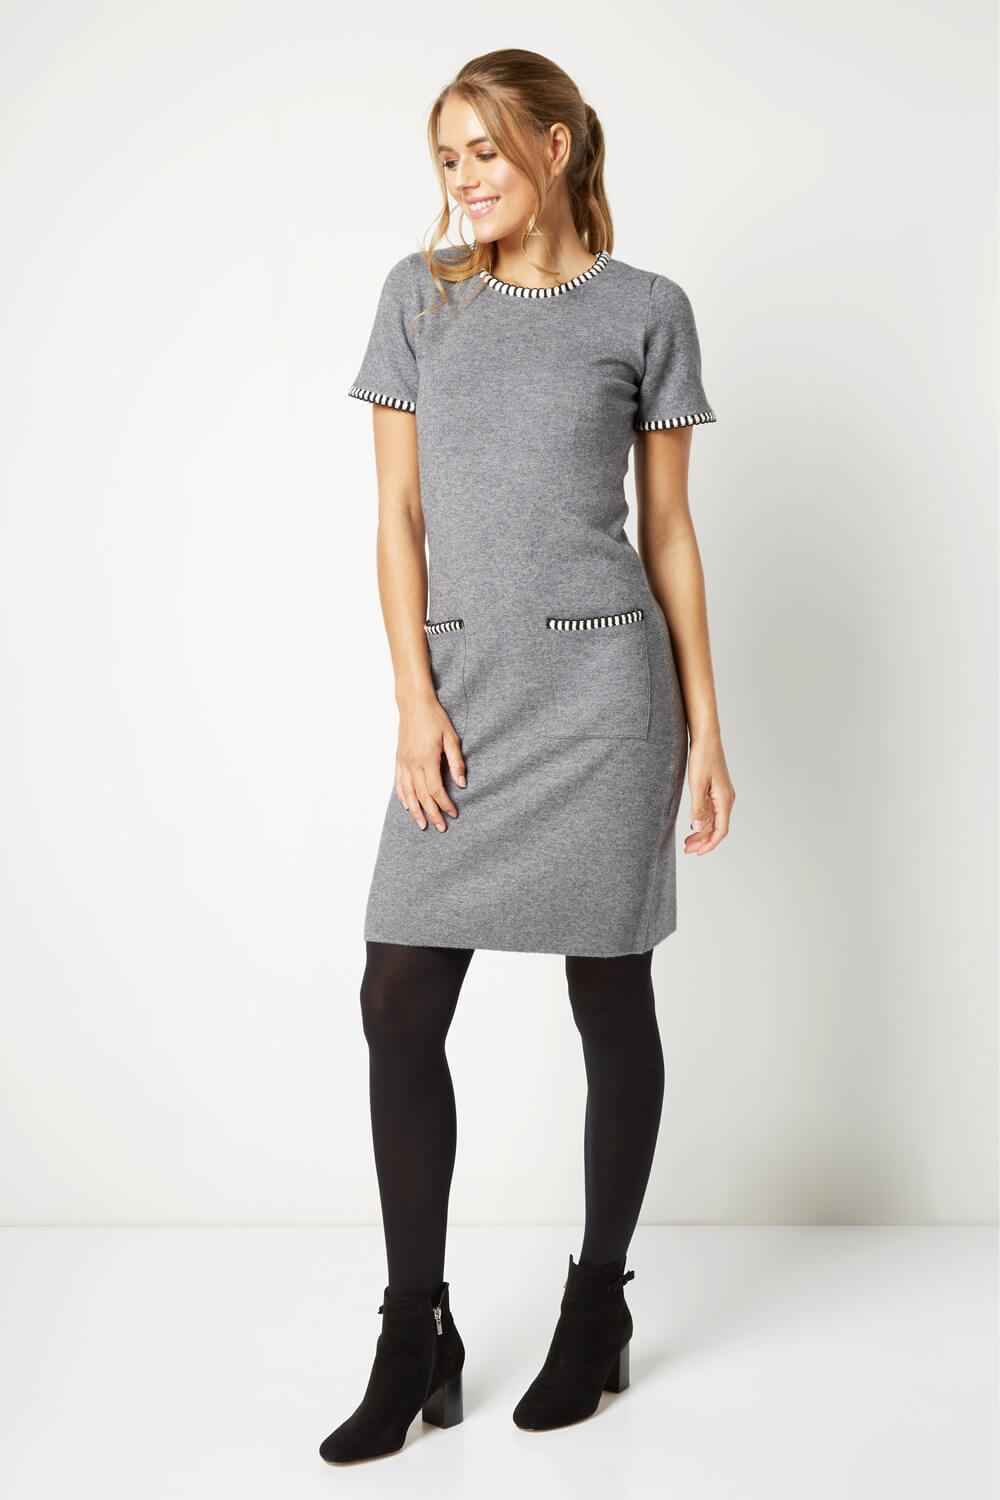 Grey Contrast Trim Knit Dress, Image 2 of 5